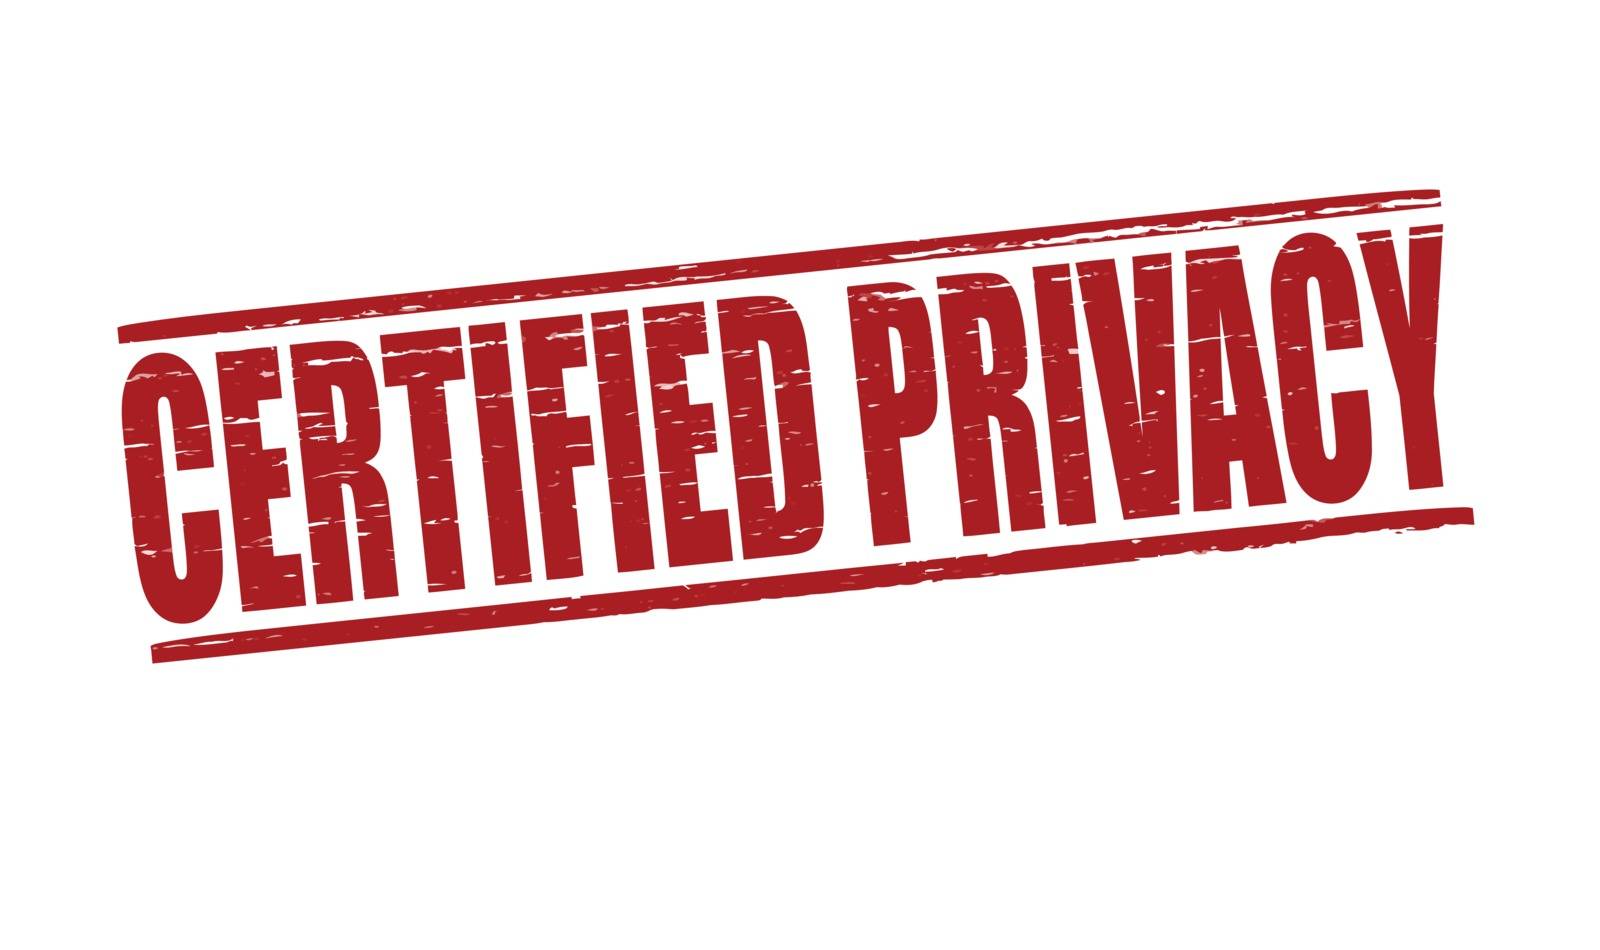 Certified privacy by carmenbobo